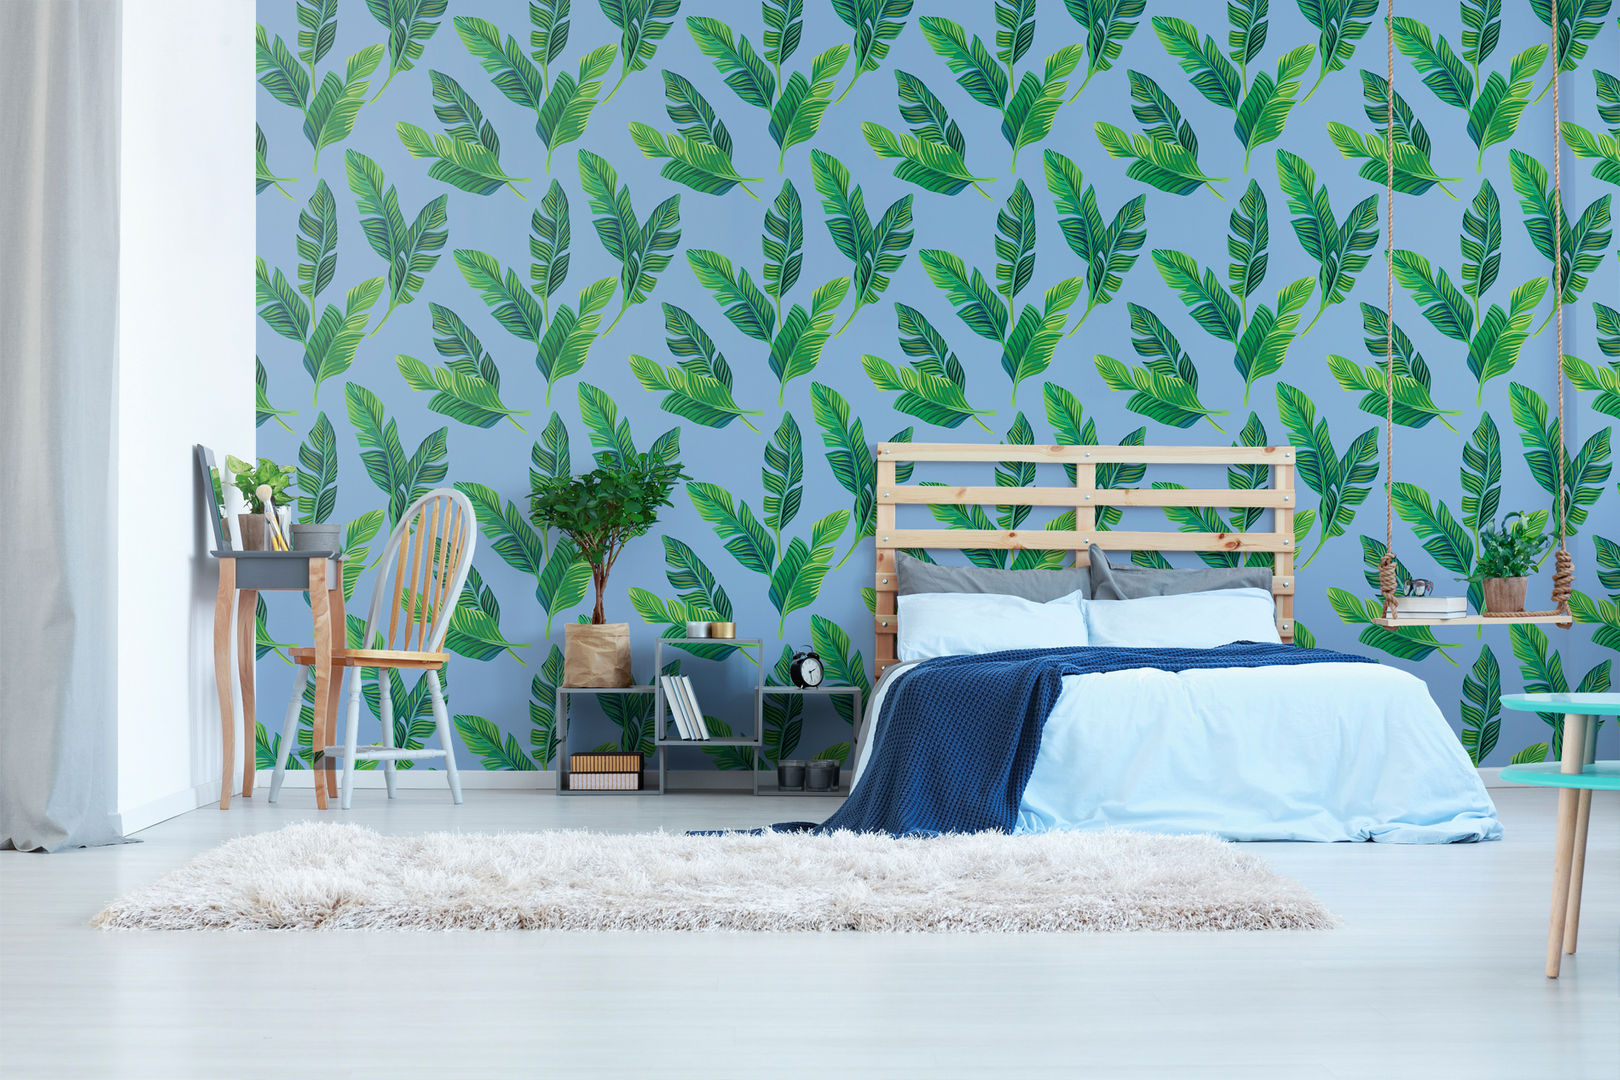 BEDROOM IN THE SHADE OF LEAVES Pixers Dormitorios tropicales Pixers,bedroom,pineapple,tropical,wallmural,wallpaper